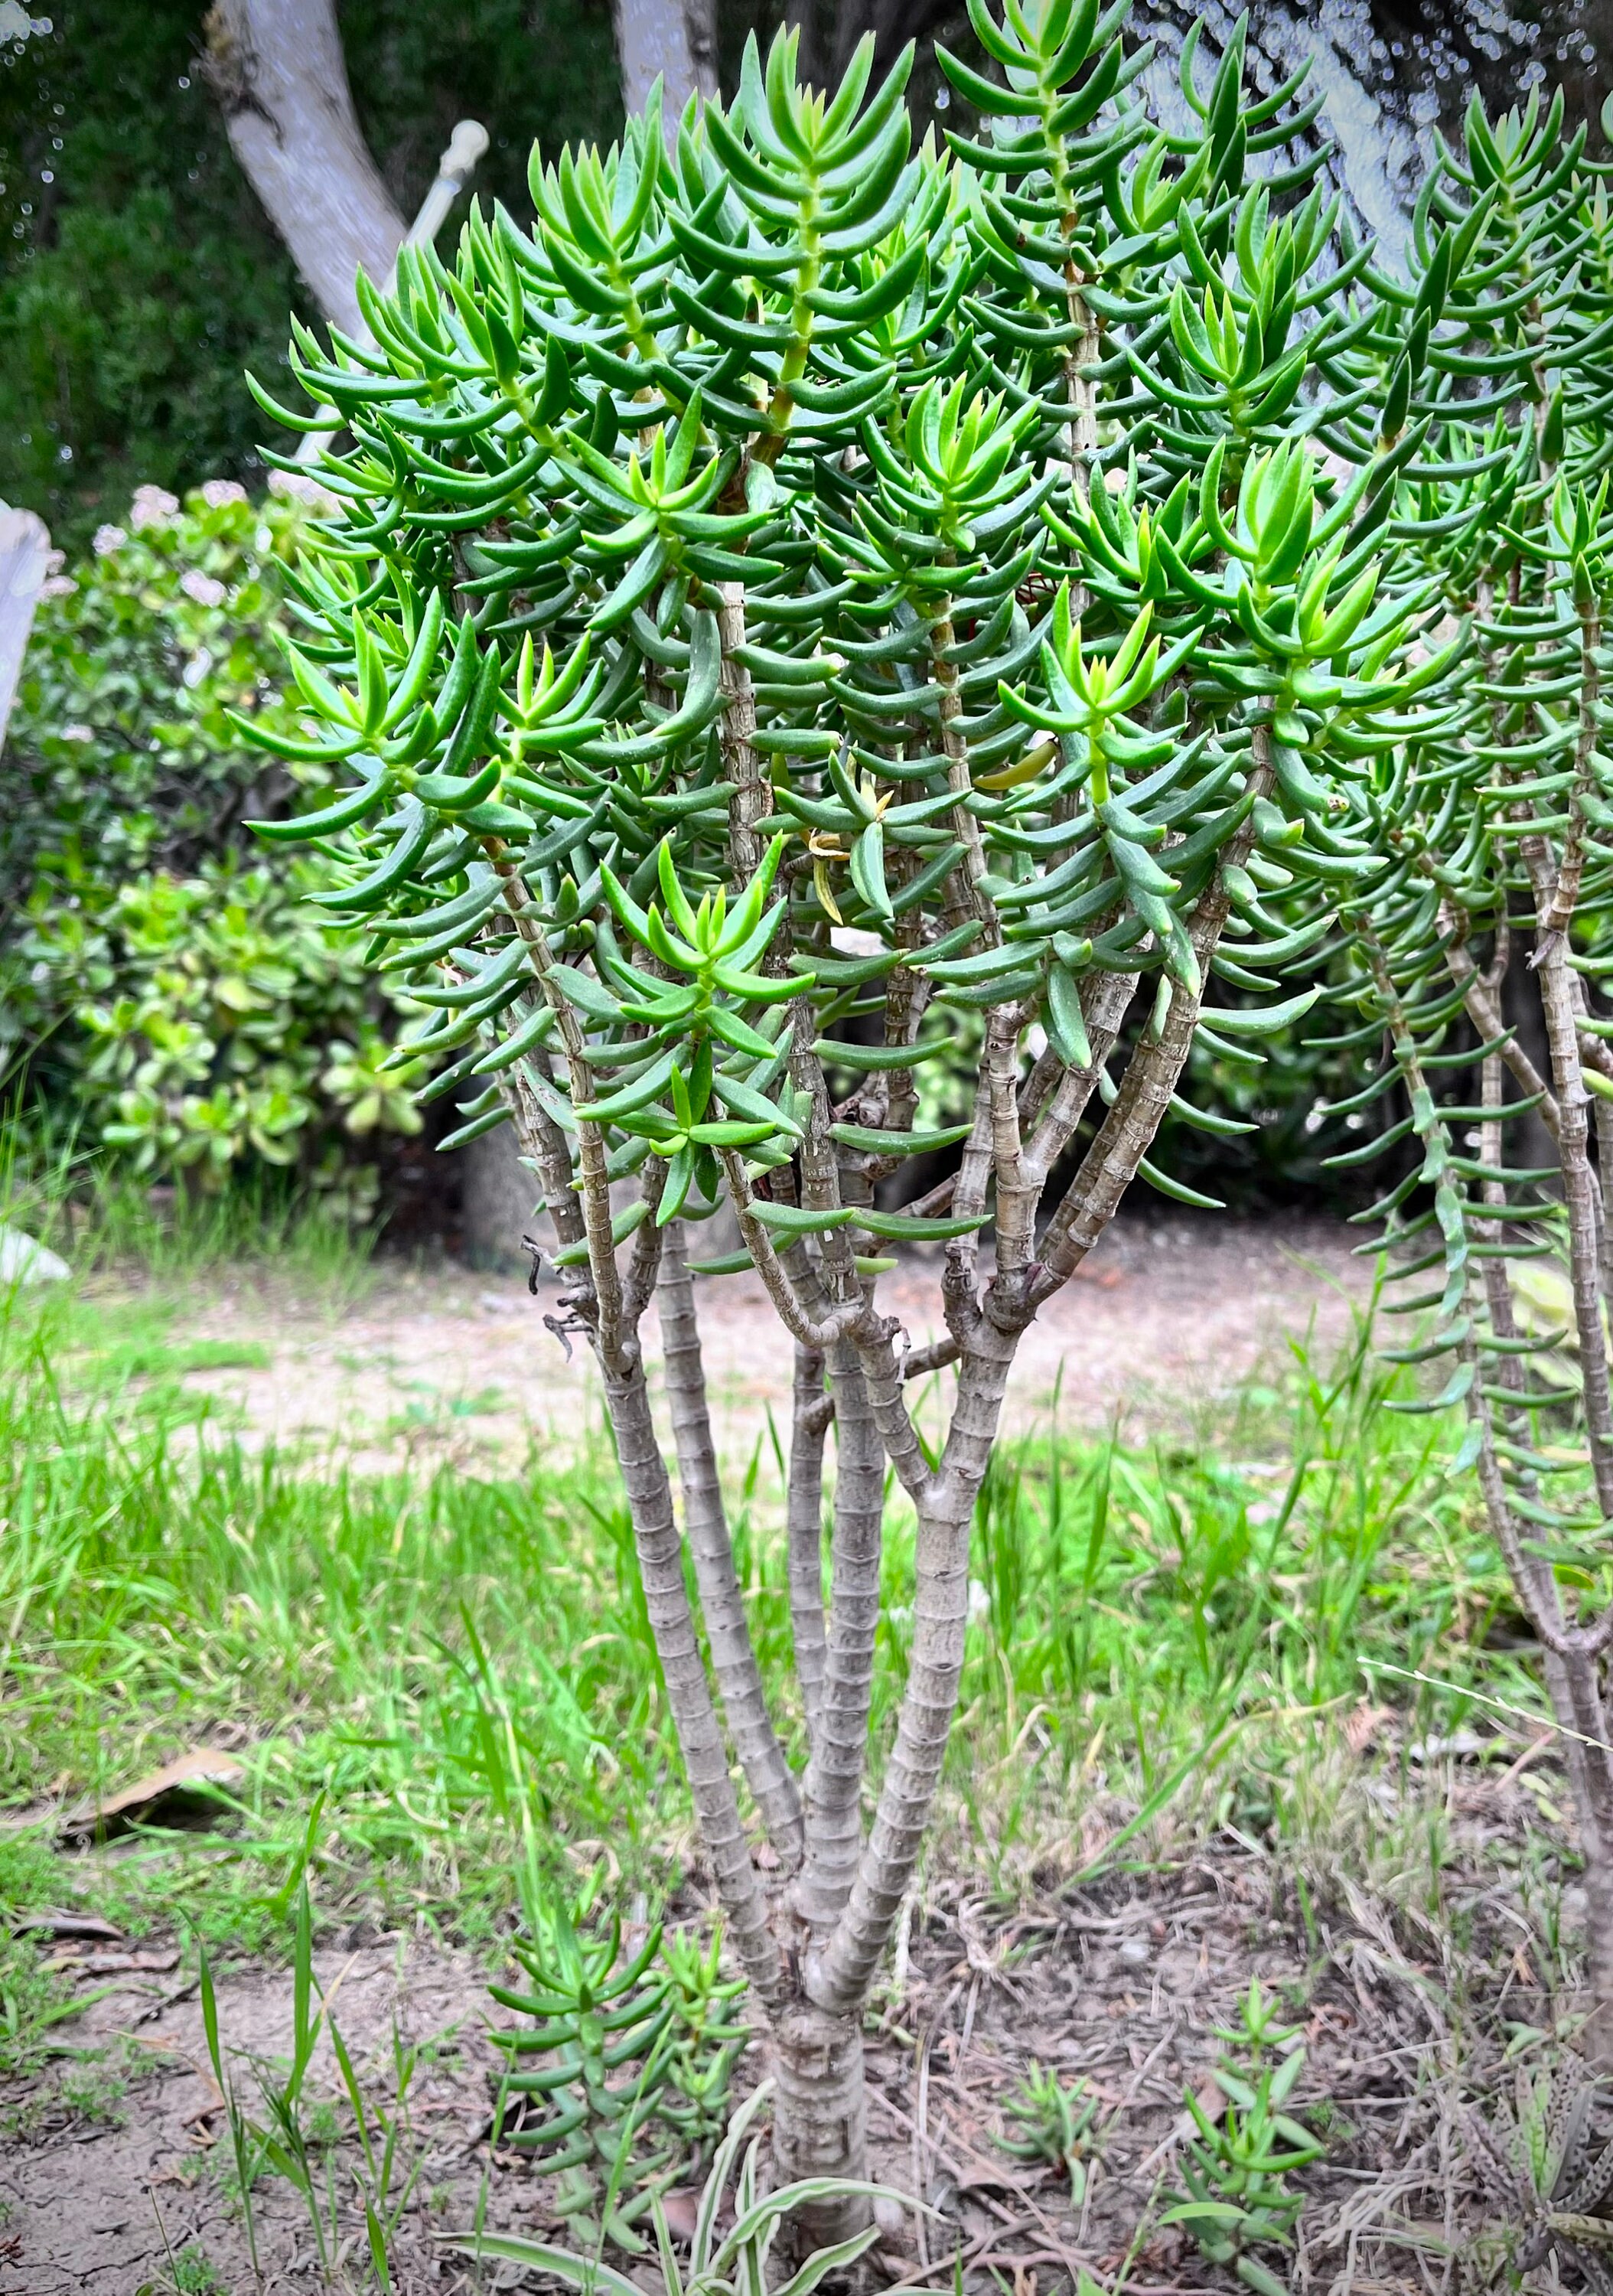 Mini Pine Tree Succulent - Crassula tetragona - 4 Inch